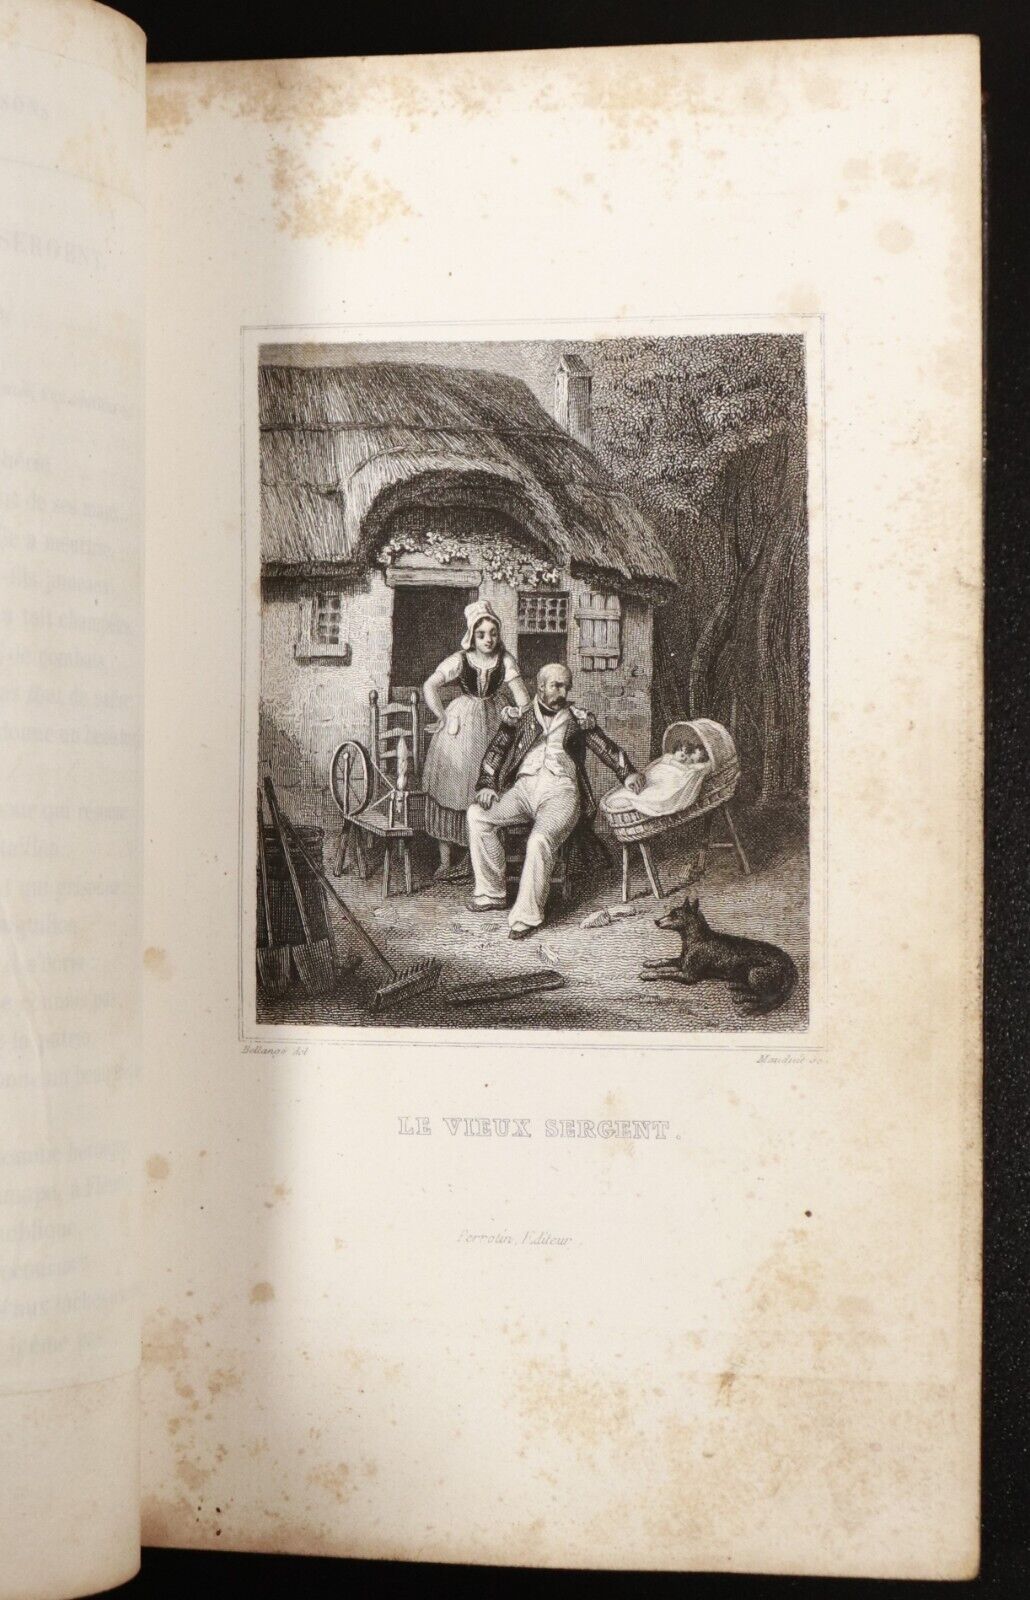 1843 Oeuvres Completes De P.J. De Béranger Antiquarian French Poetry Book Vol 2